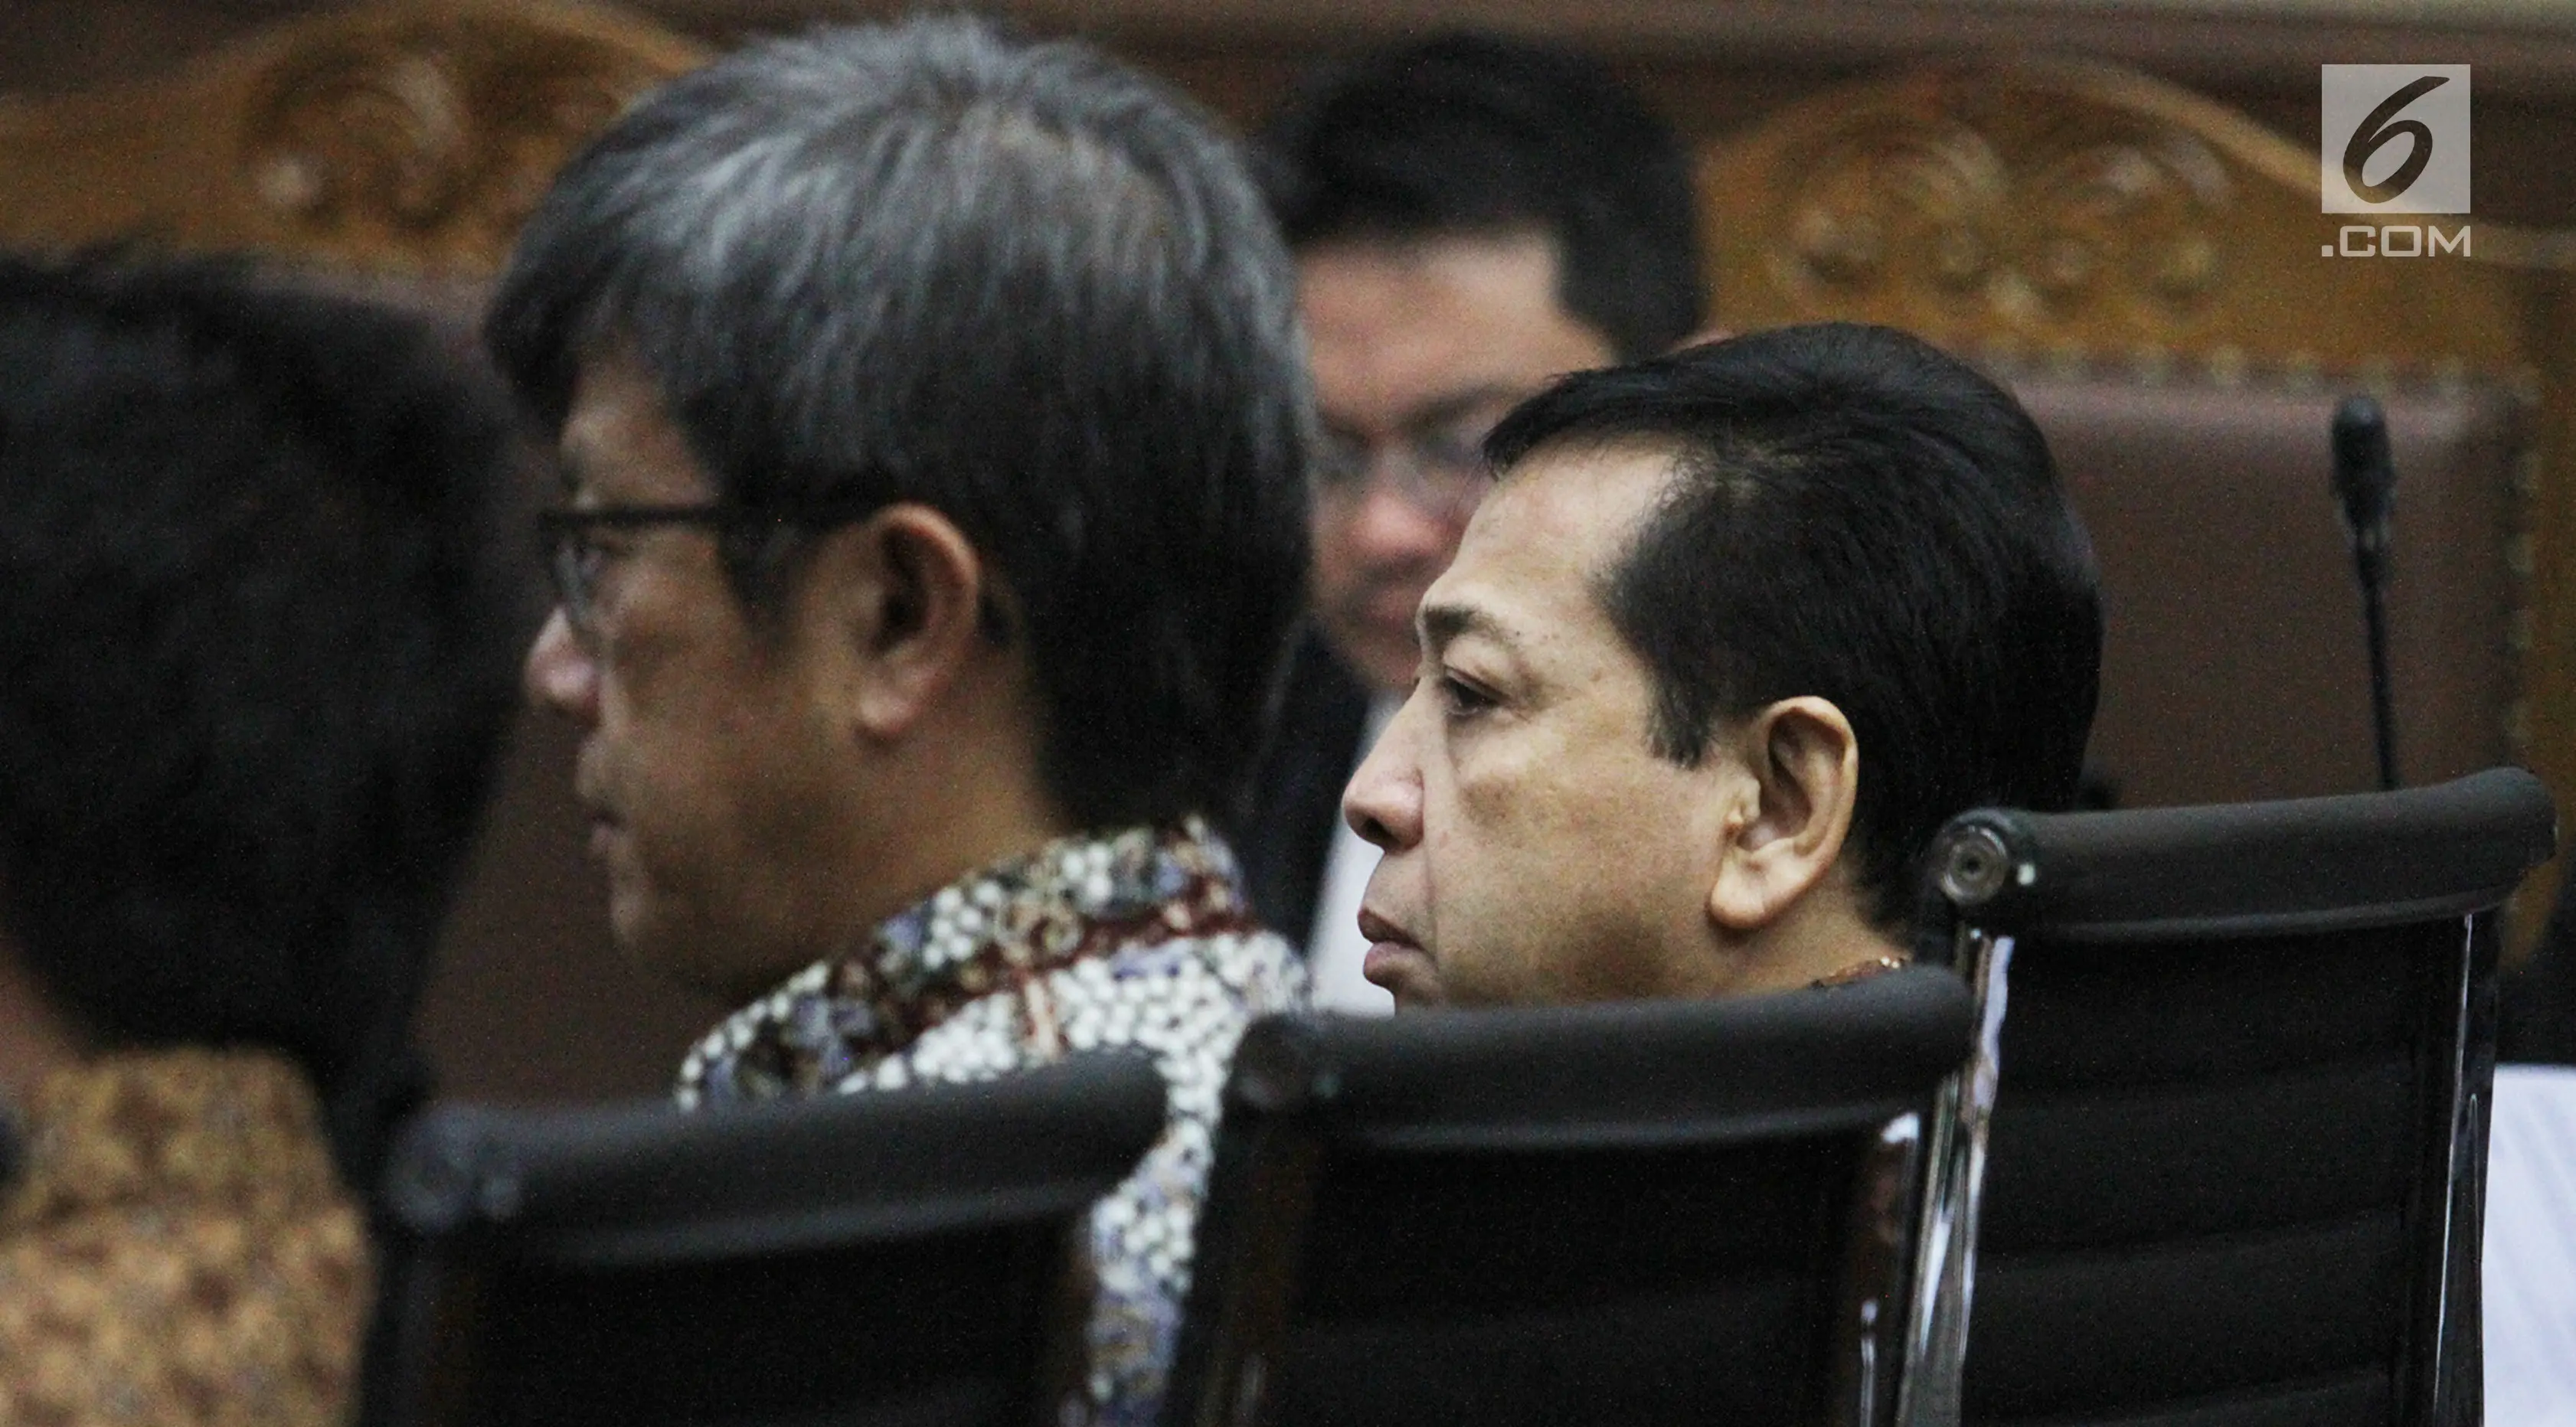 Ketua DPR Setya Novanto (kanan) mengikuti sidang kasus korupsi e-KTP di Pengadilan Tipikor Jakarta, Jumat (3/11). Dalam sidang tersebut, beberapa kali Setnov mengaku lupa saat ditanya hakim maupun jaksa penuntut umum. (Liputan6.com/Helmi Afandi)